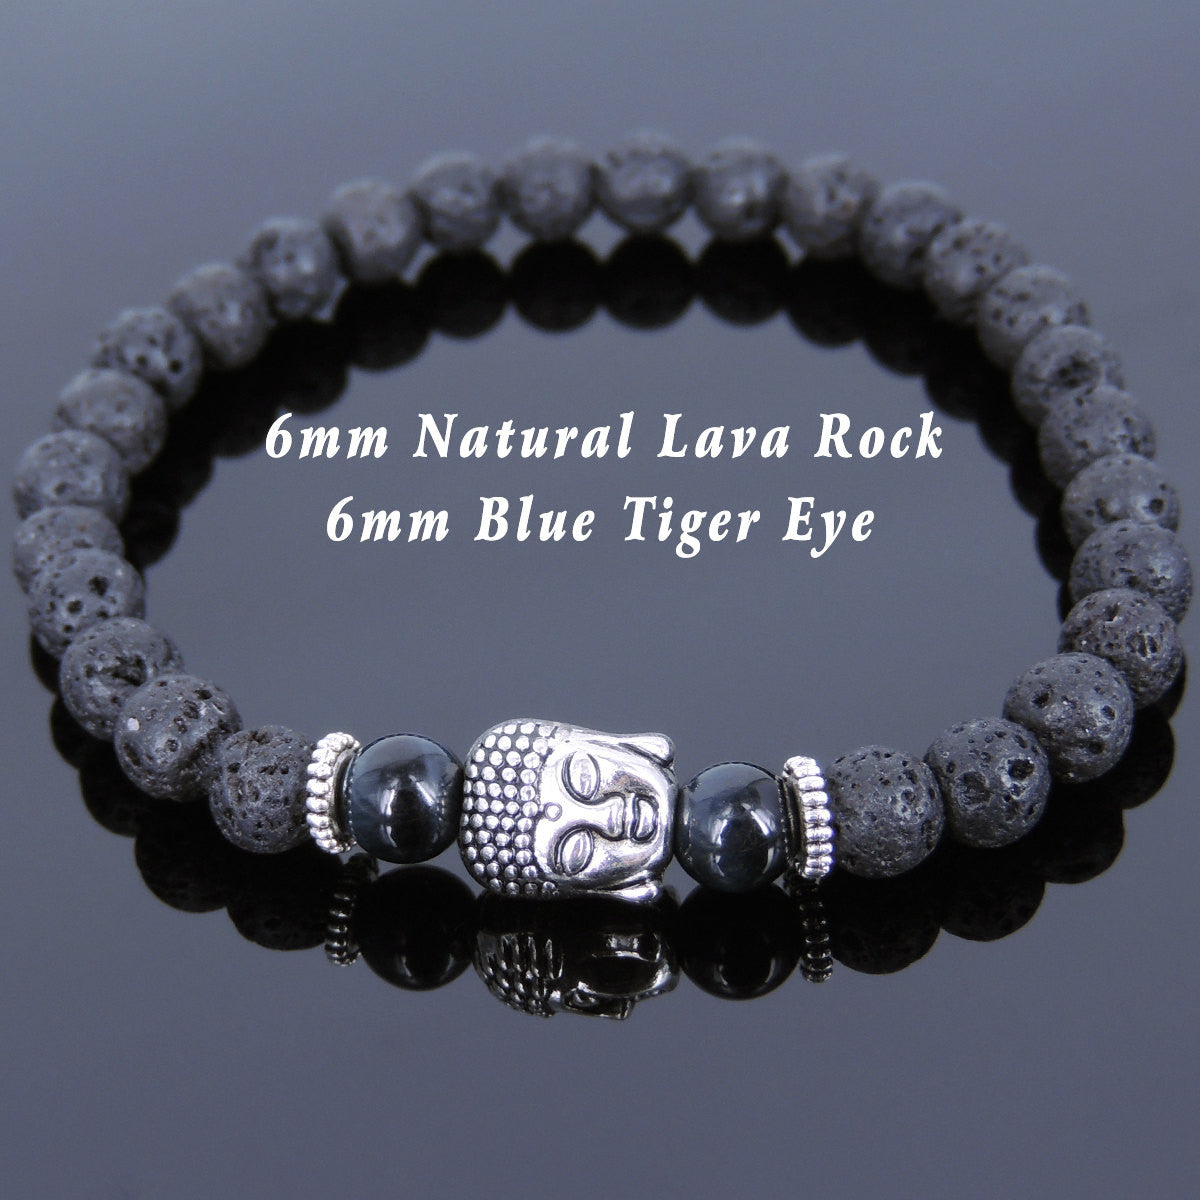 6mm Blue Tiger Eye & Lava Rock Healing Gemstone Bracelet with Tibetan Silver Sakyamuni Buddha & Spacers - Handmade by Gem & Silver TSB120